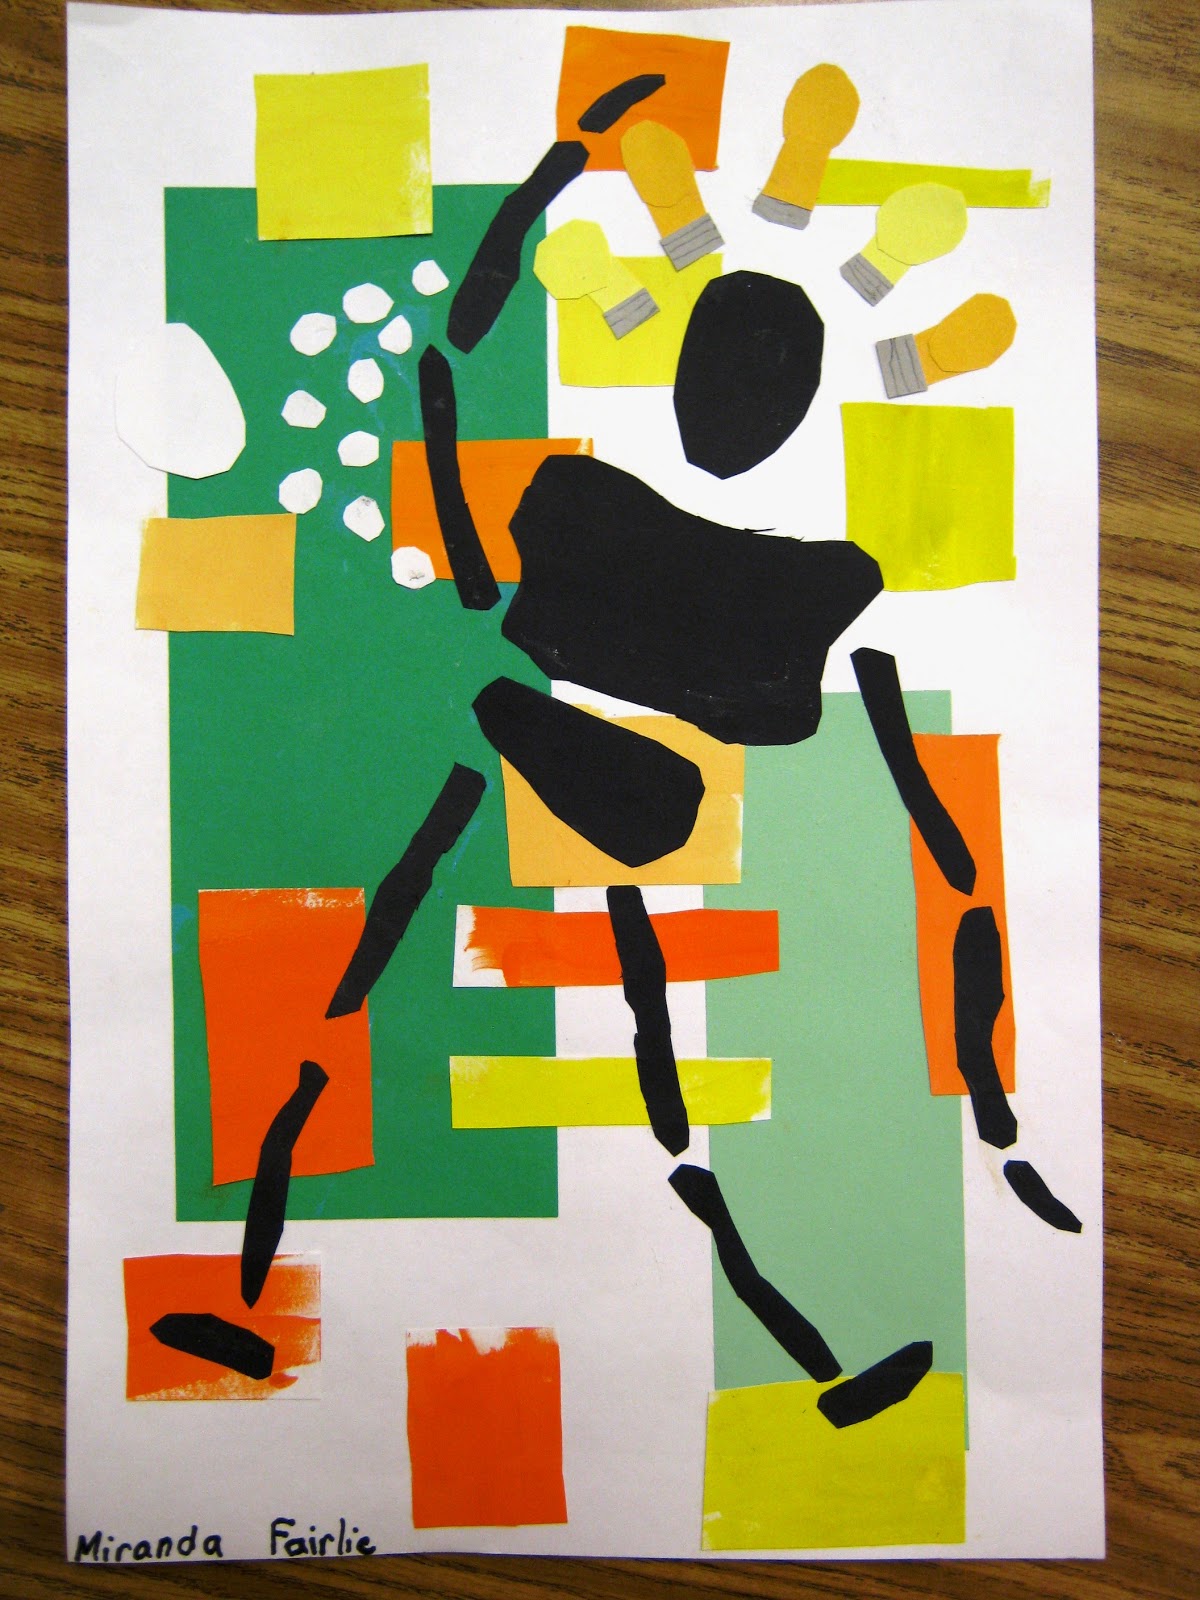 doodles&noodles: Matisse's Moving Compositions